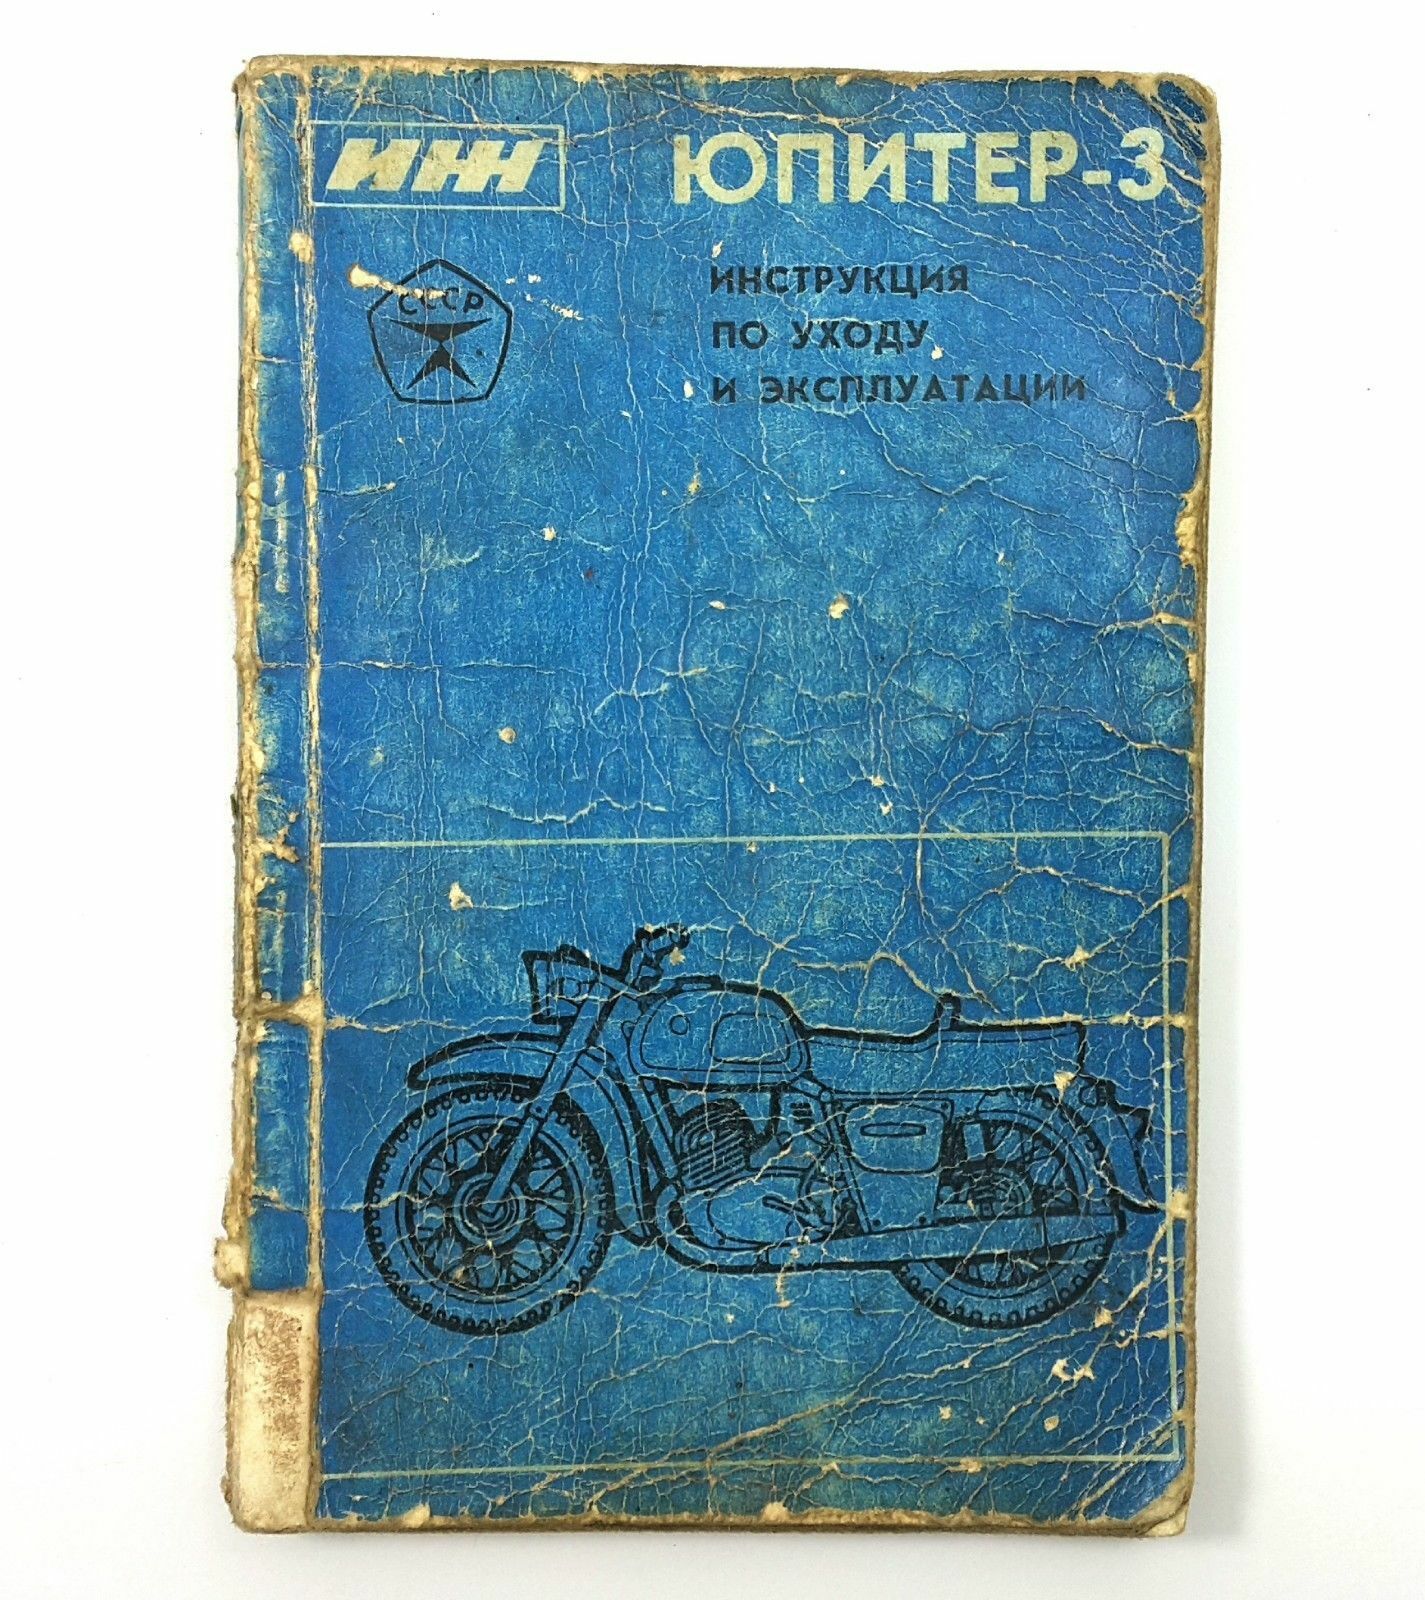 IZH IZ YUPITER-3 SOVIET RUSSIAN MOTORCYCLE - VINTAGE MANUAL BOOK INSTRUCTION